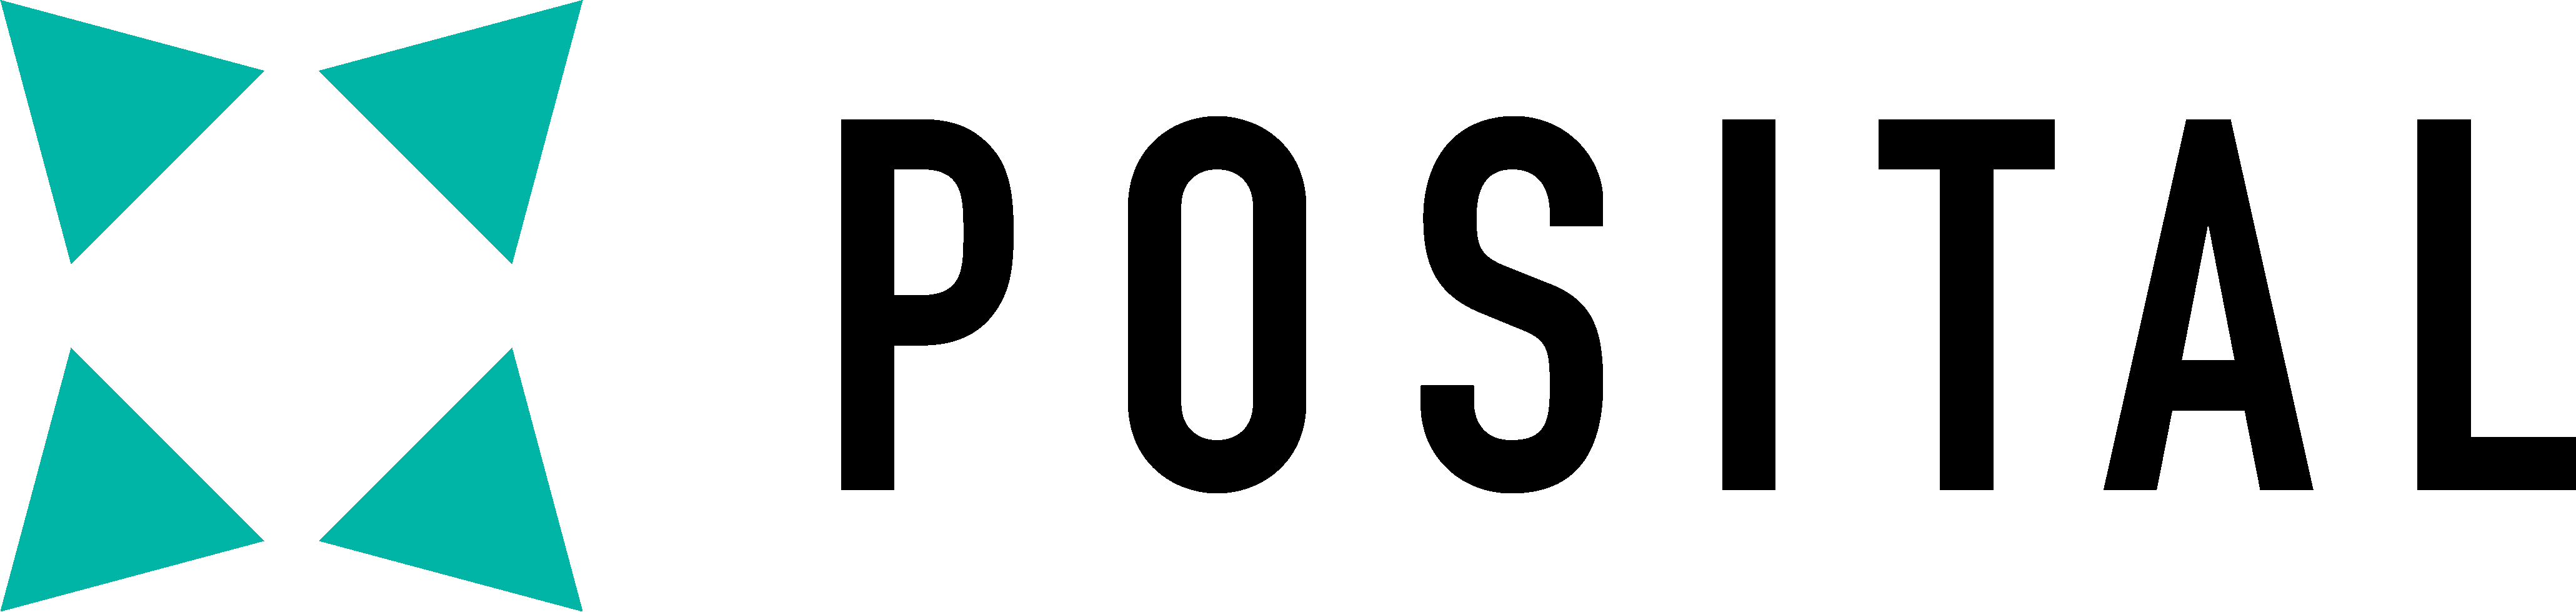 Posital logo